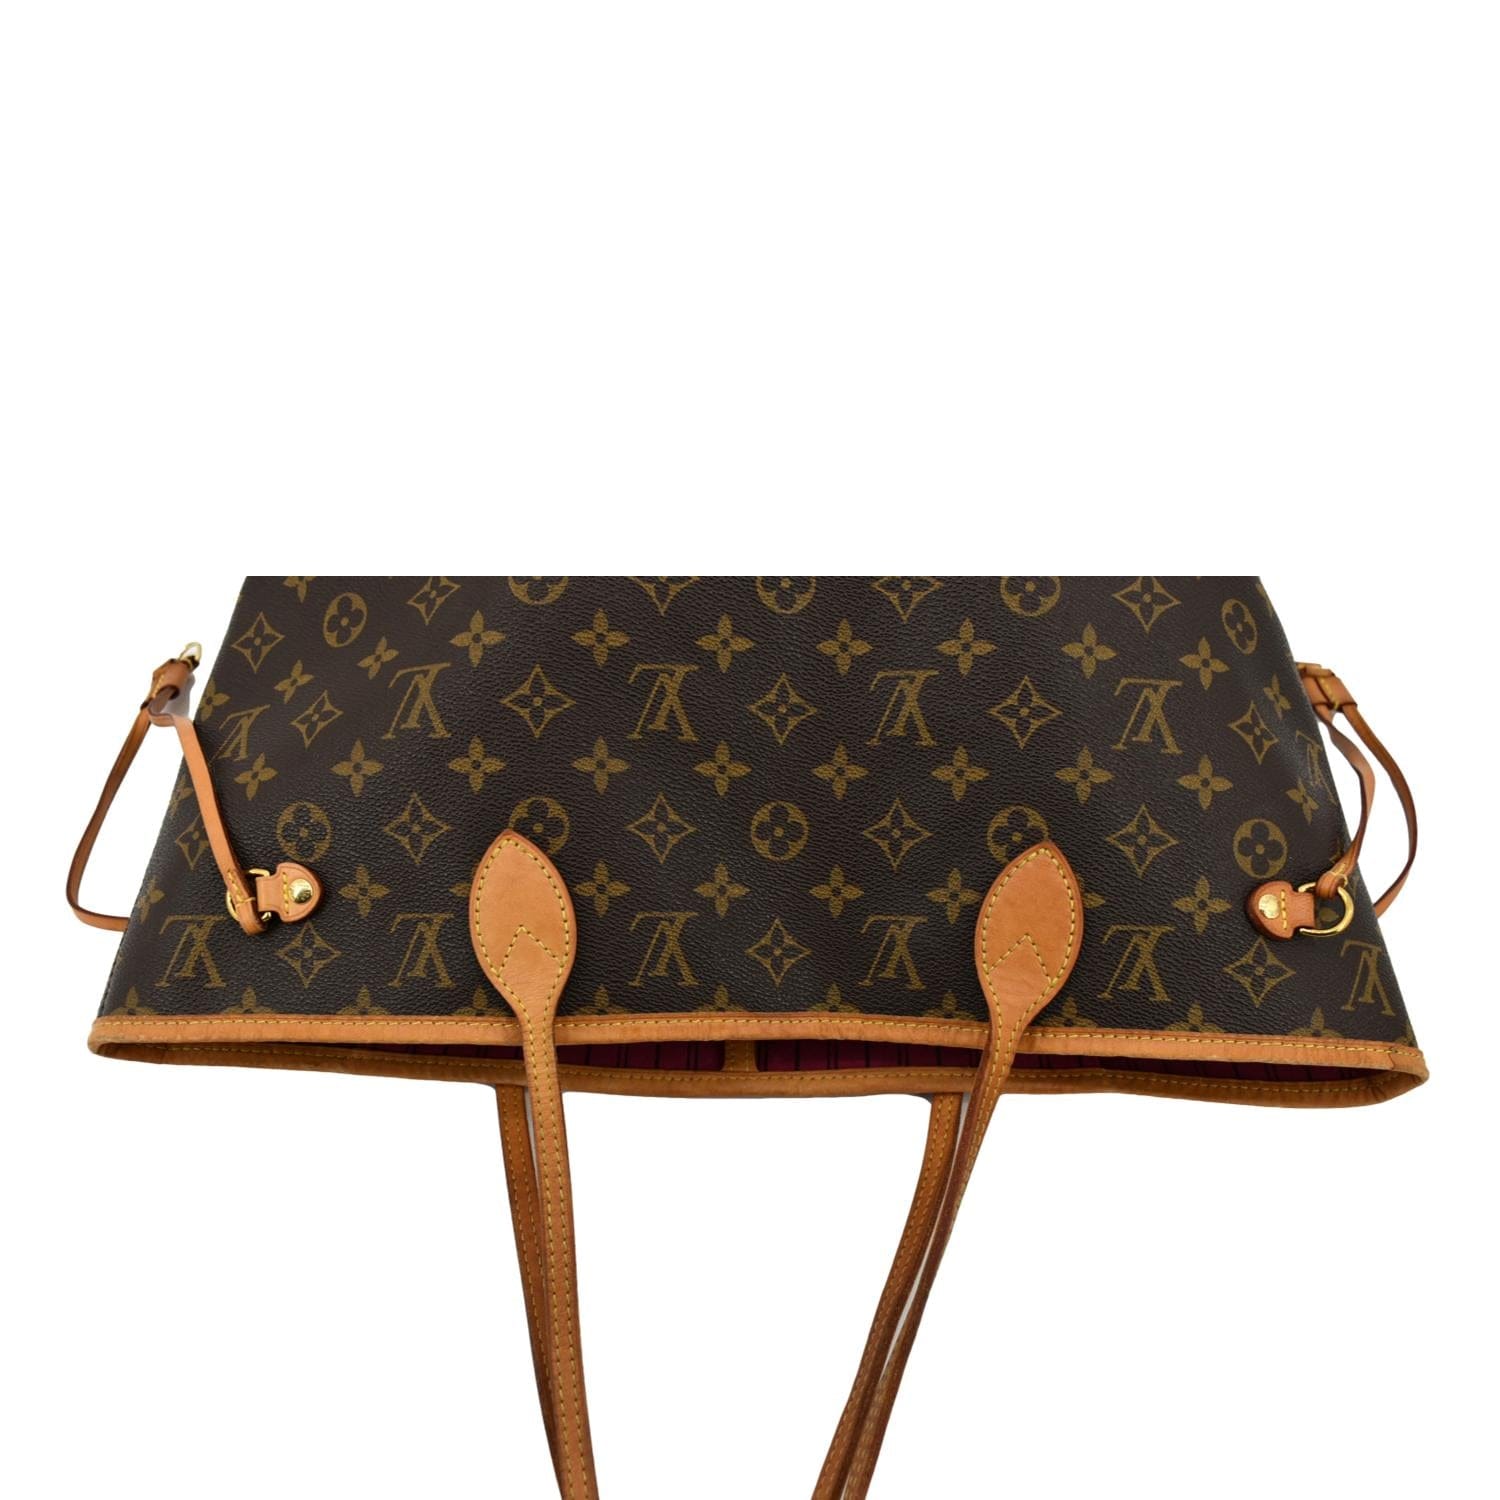 Louis Vuitton Neverfull MM Monogram Canvas Tote Bag